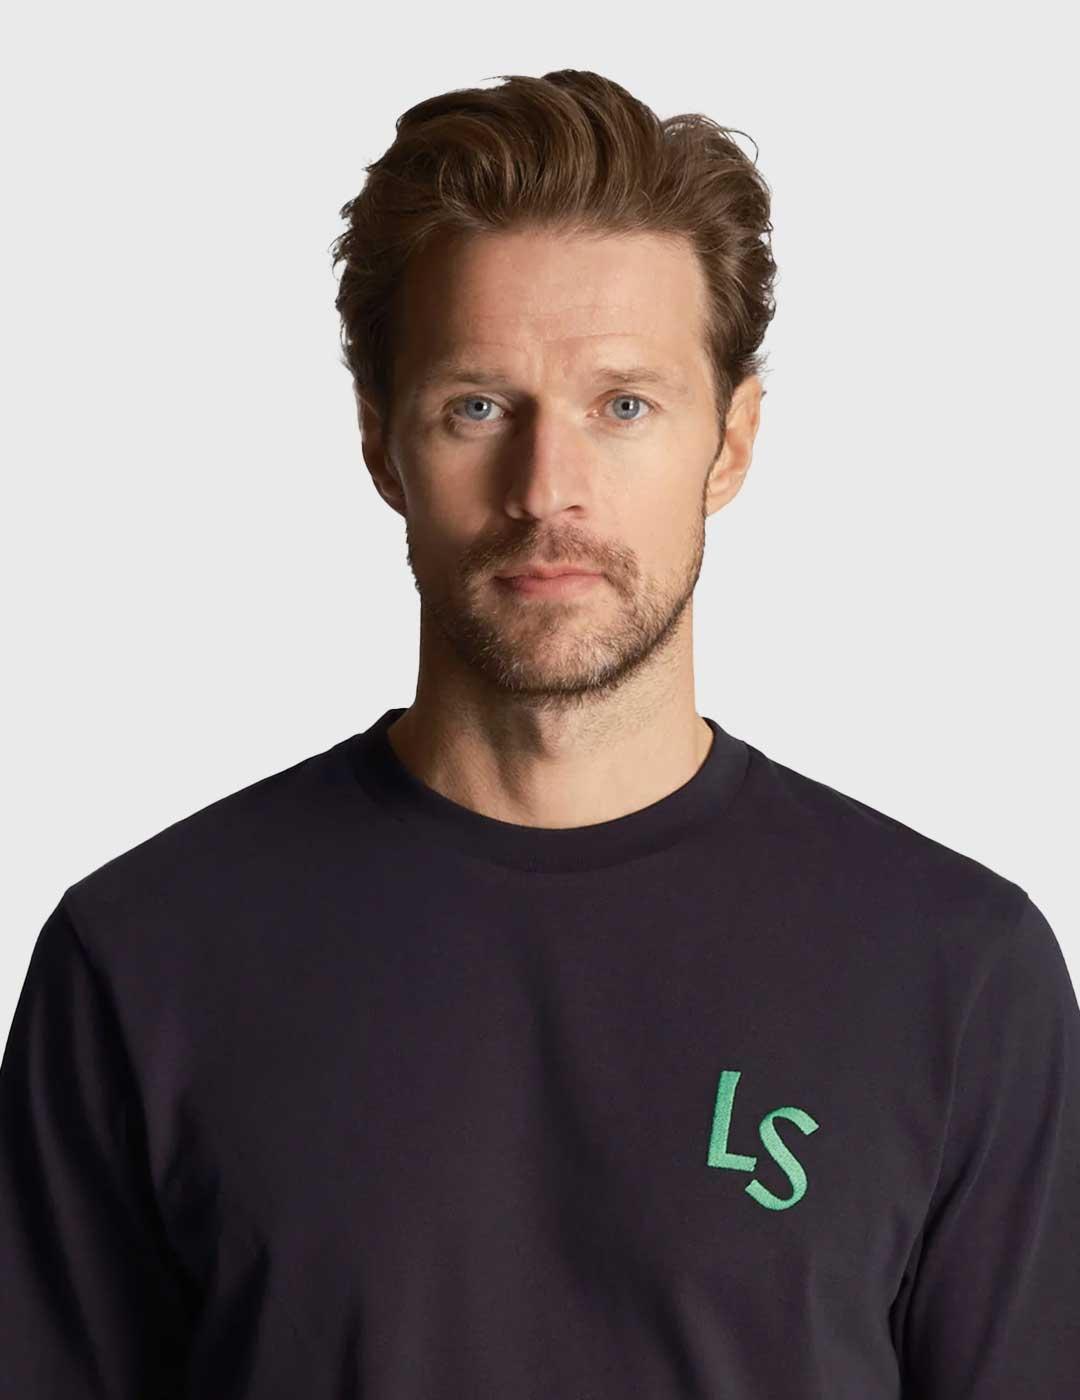 Lyle & Scott Logo T-Shirt Camiseta marino para hombre